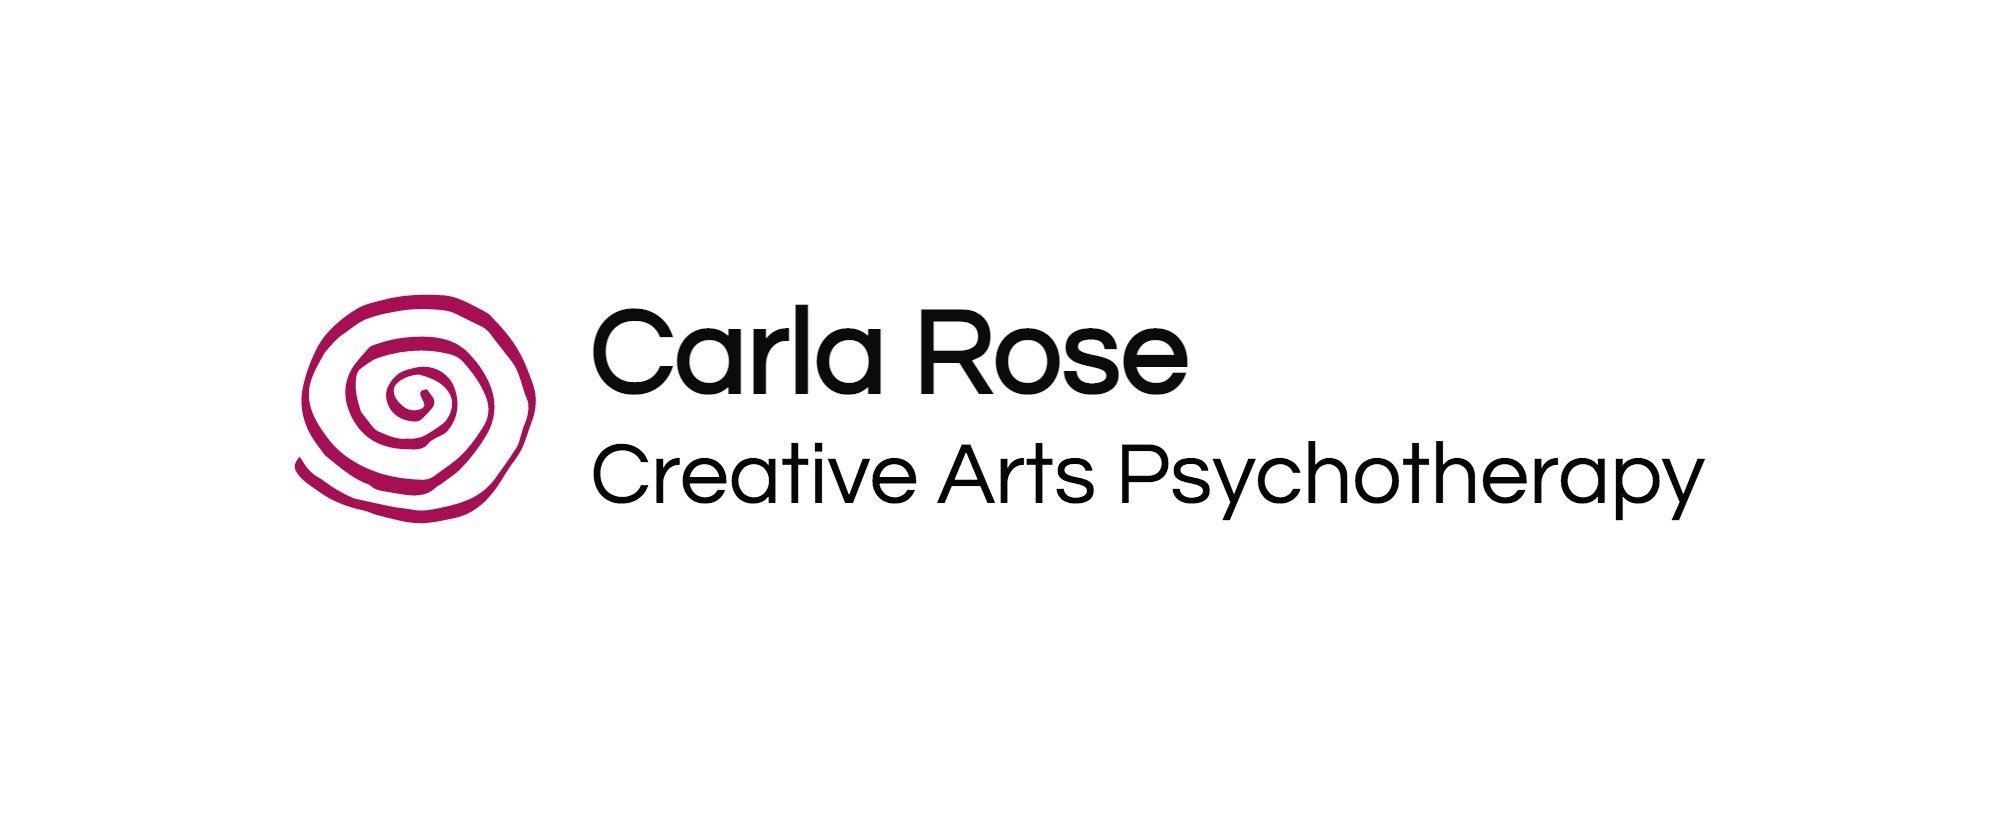 CARLA ROSE ART THERAPY